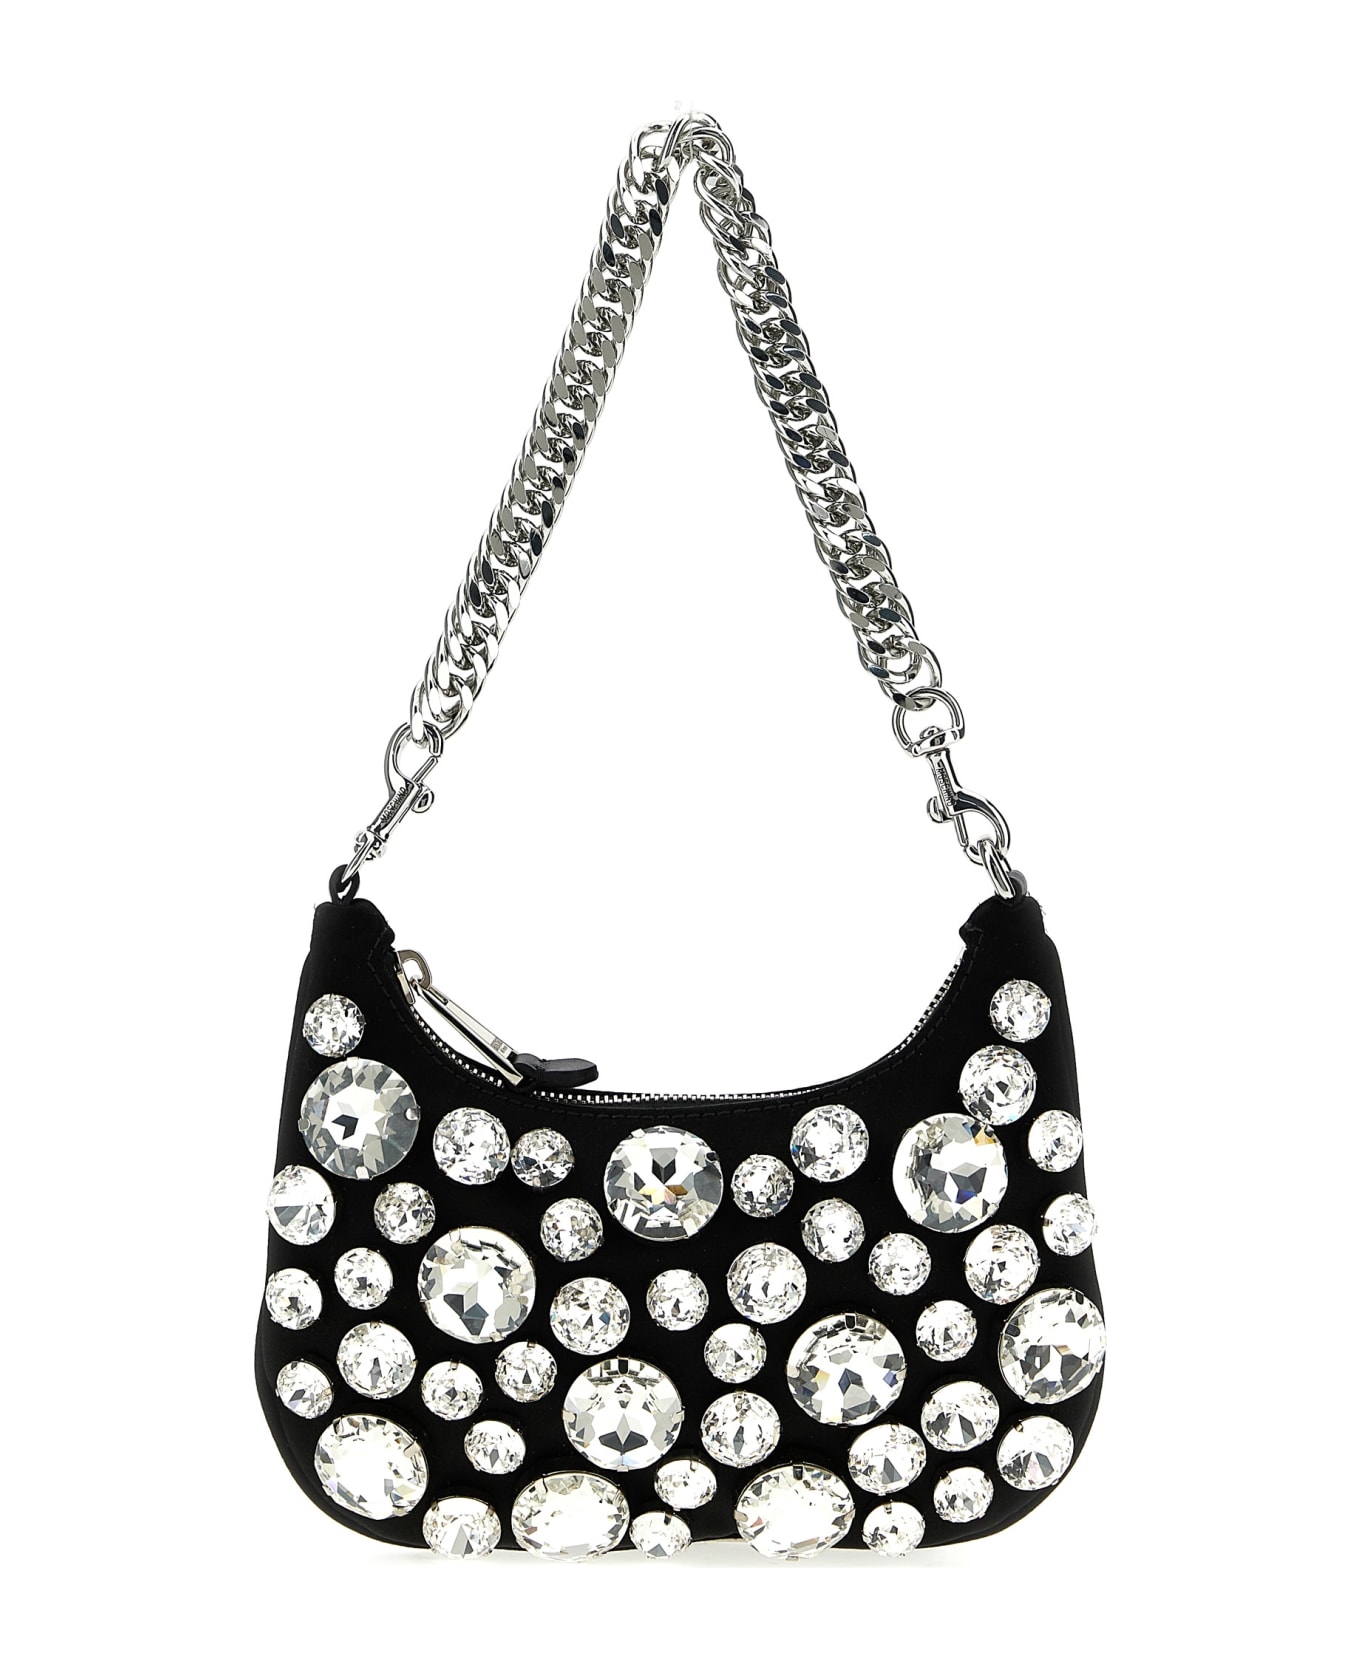 Moschino Jewel Stones Handbag - Black   トートバッグ